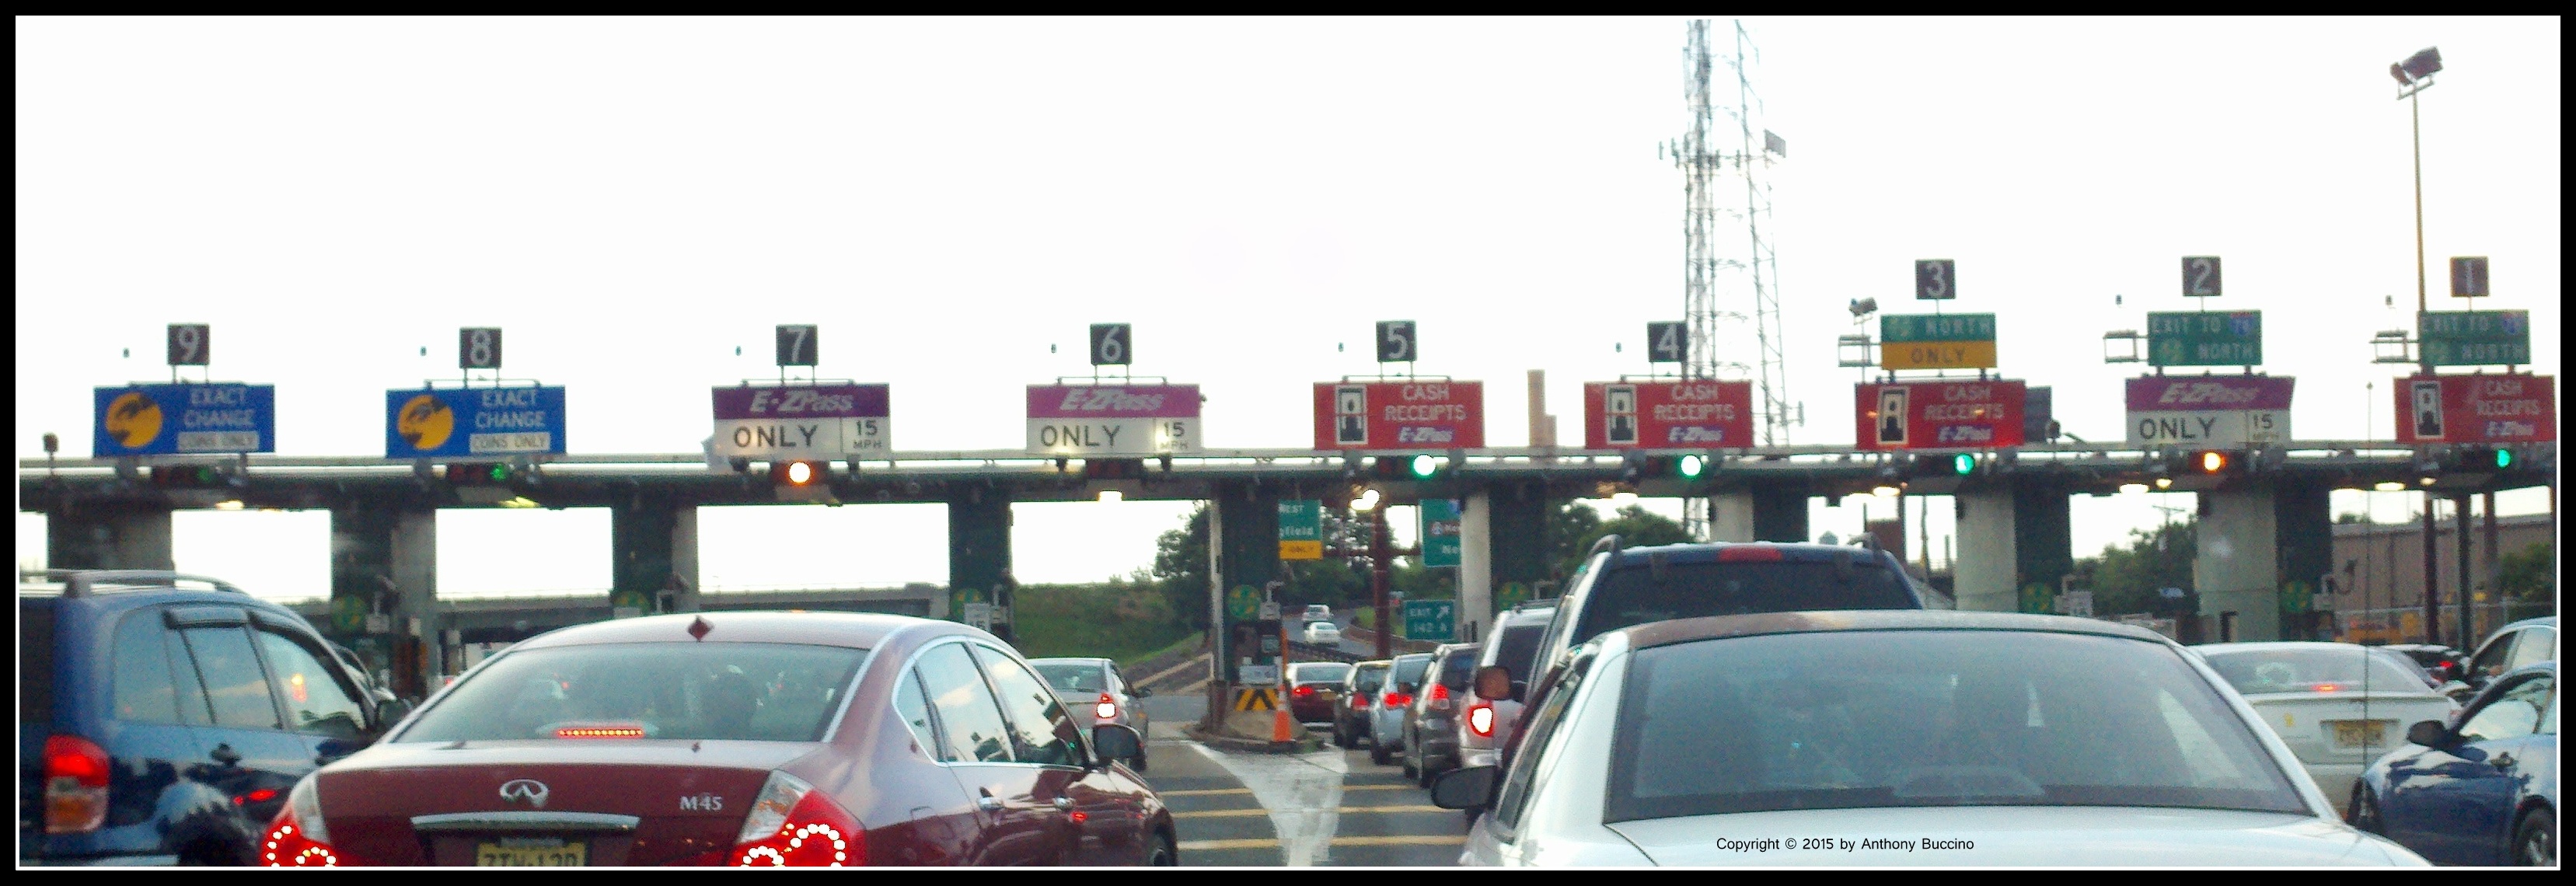 Garden State Parkway toll booth traffic jam, e-zpass, © A Buccino